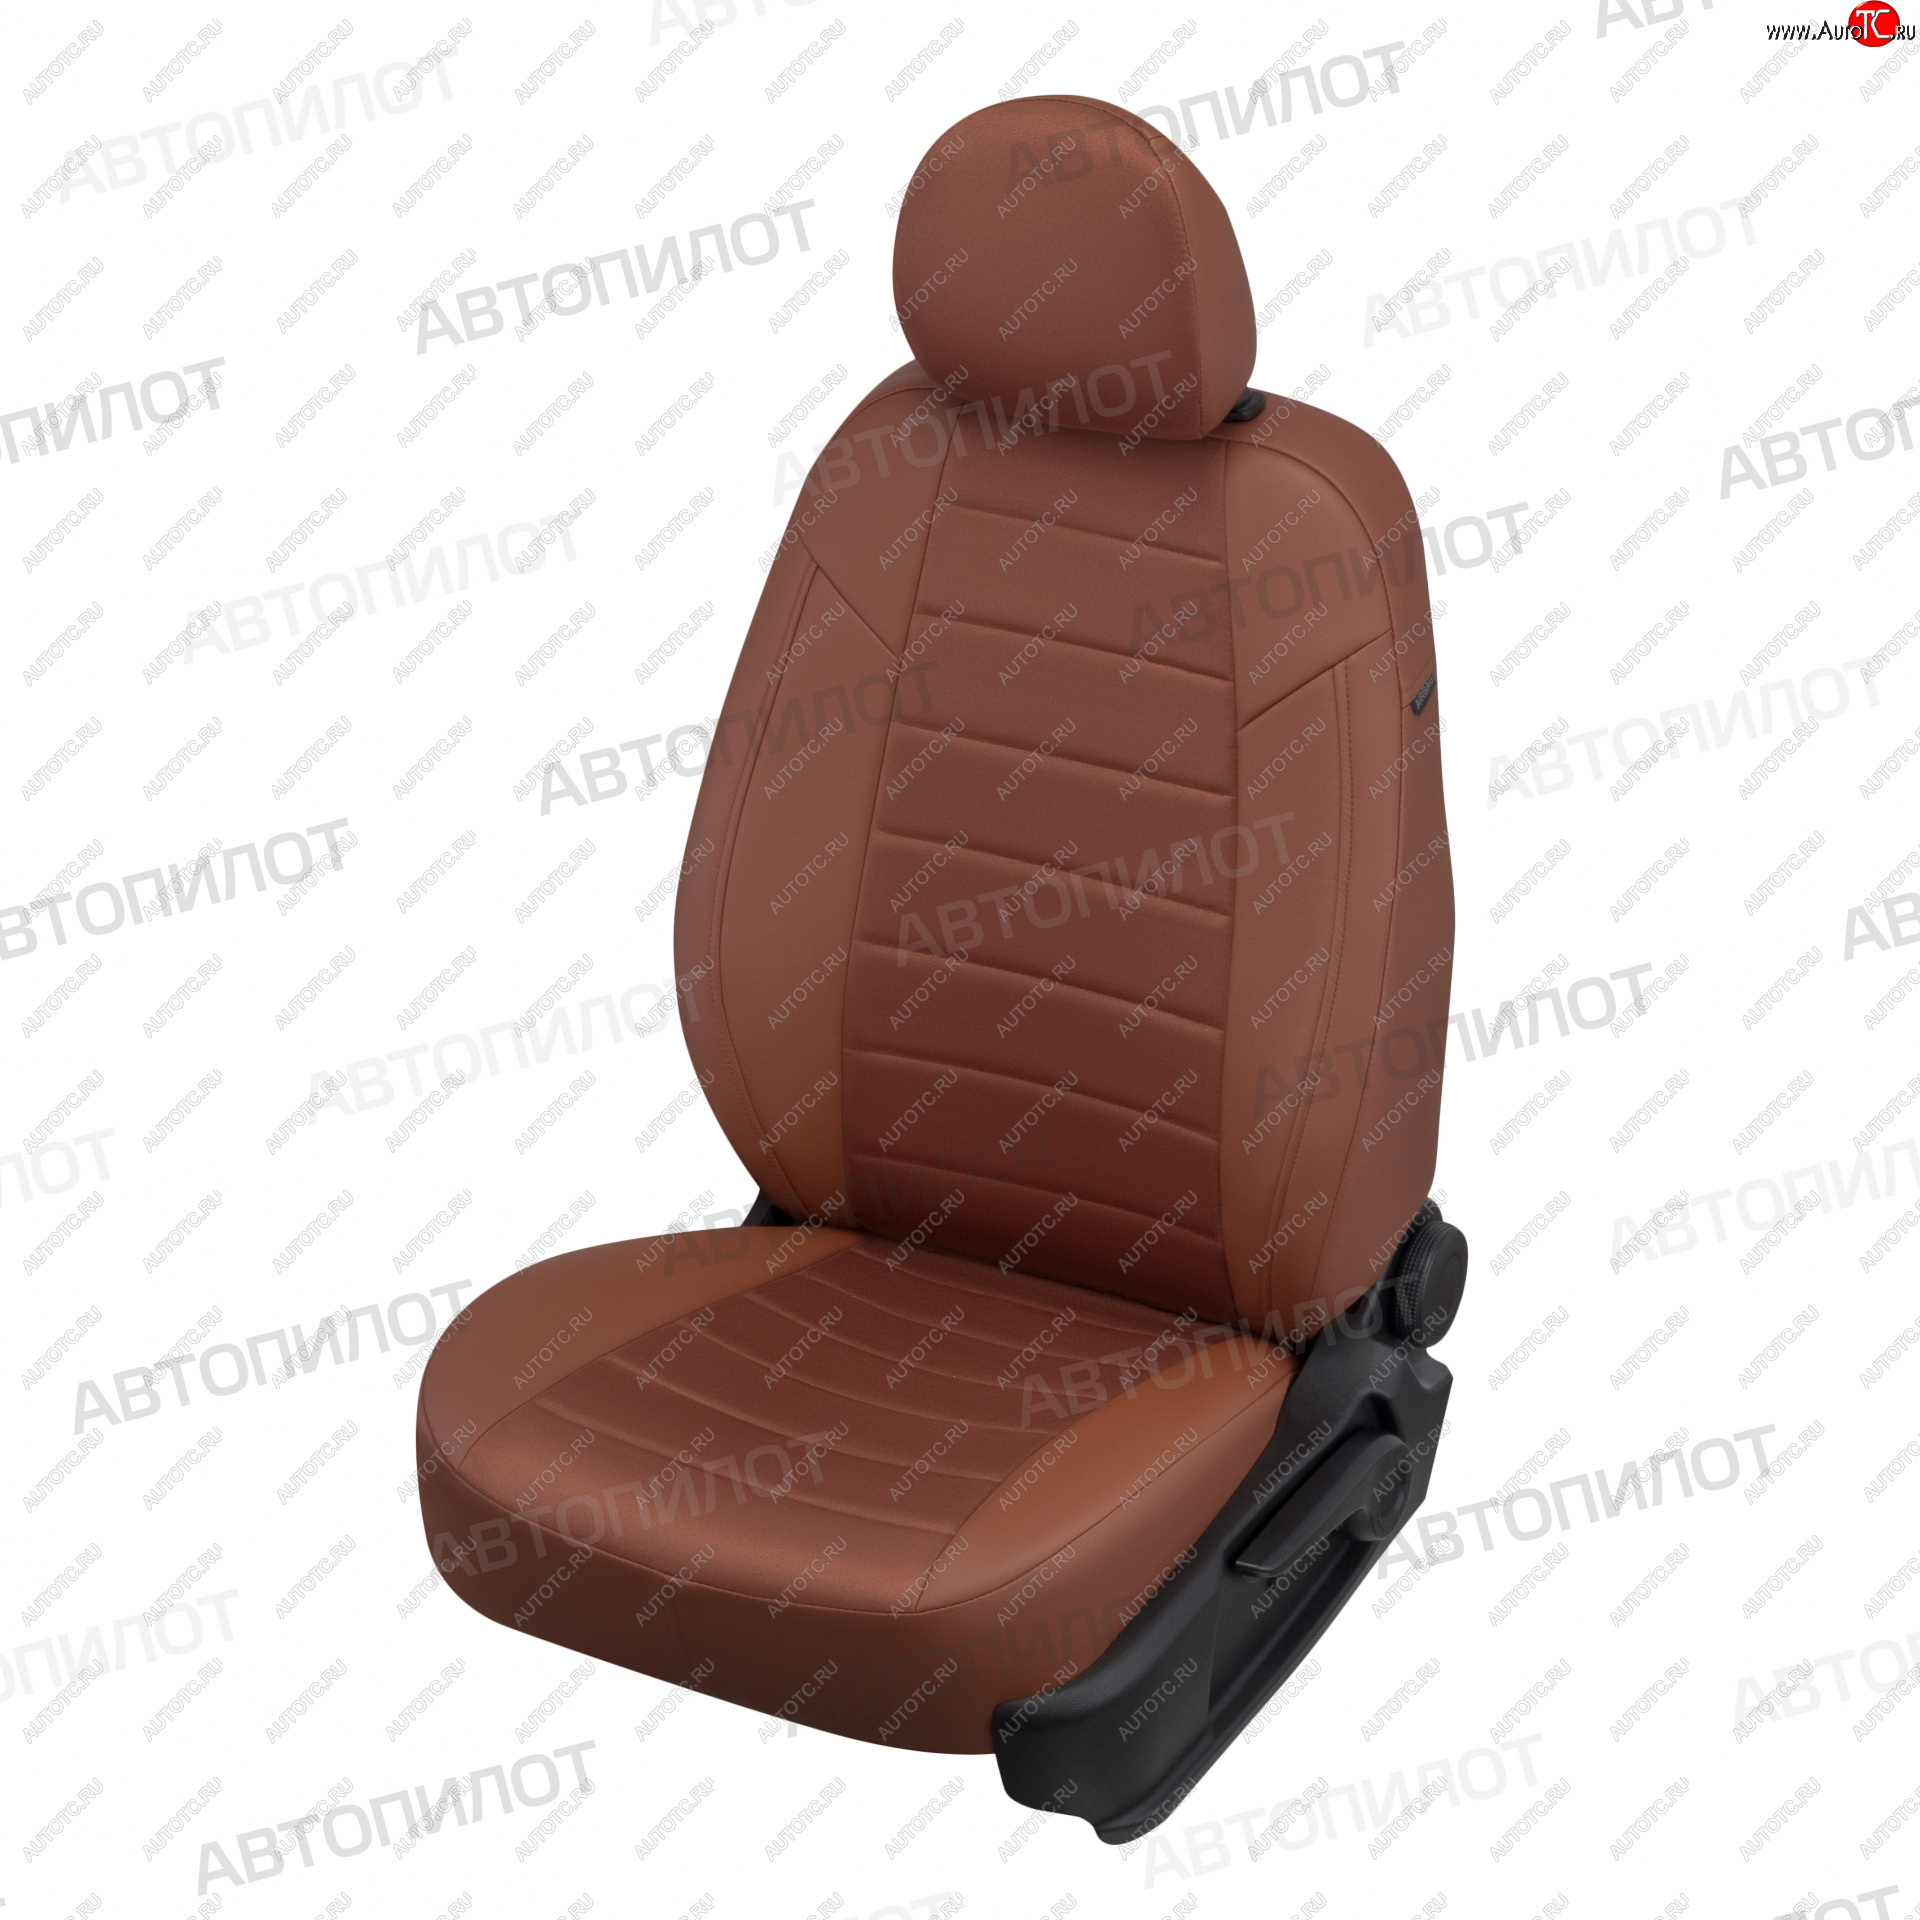 13 449 р. Чехлы сидений (экокожа/алькантара) Автопилот  KIA Rio  2 JB (2005-2011) (коричневый)